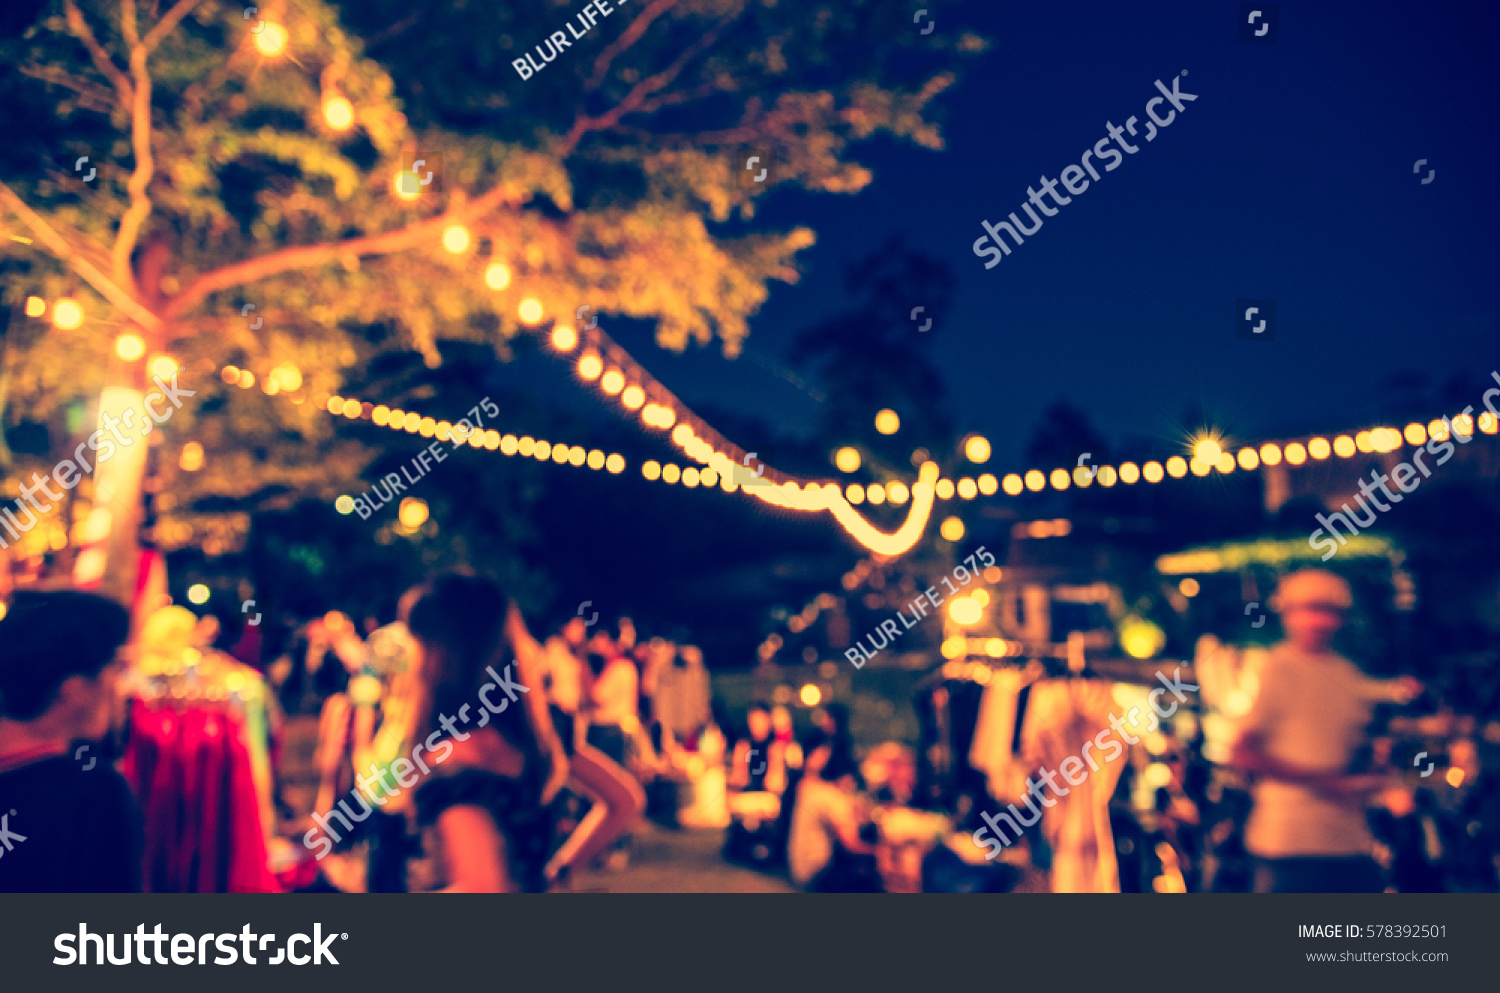 Vintage Tone Blur Image Night Festival Stock Photo 578392501 | Shutterstock